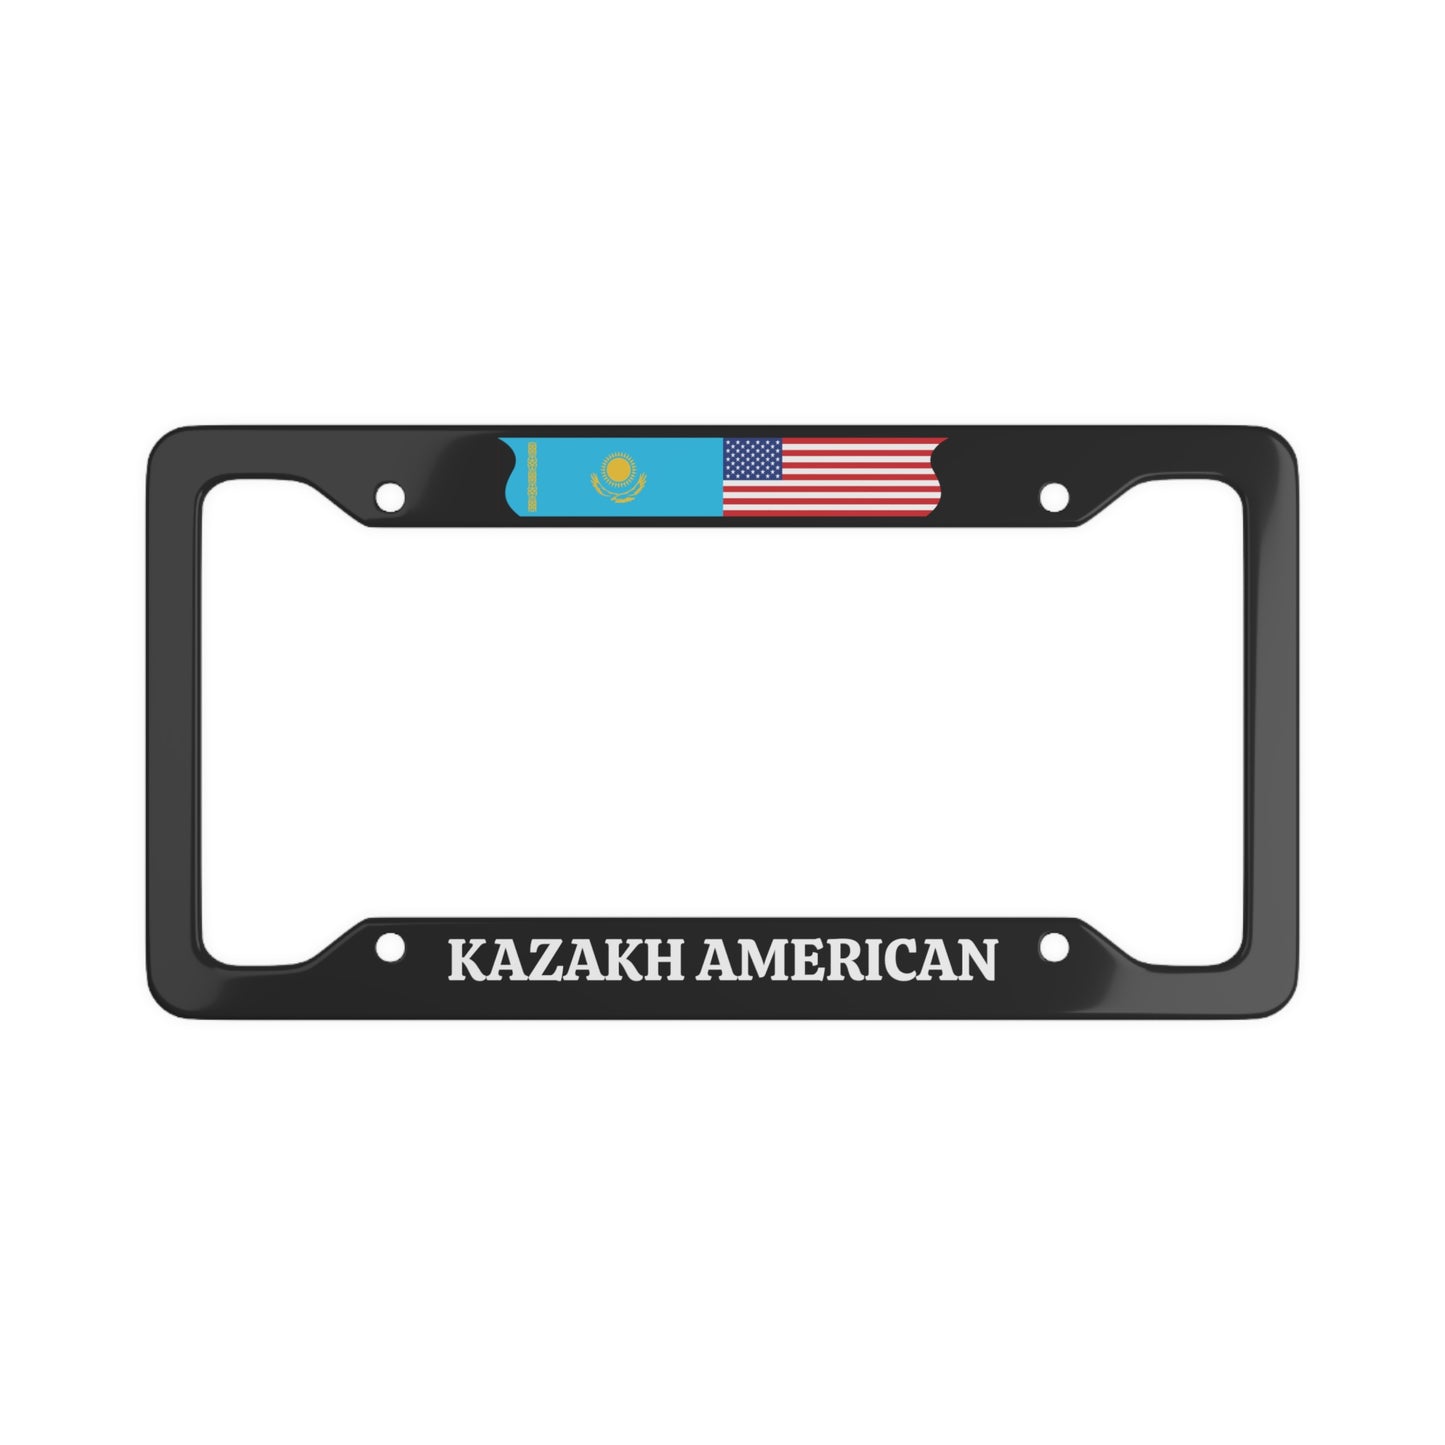 KAZAKH AMERICAN License Plate Frame